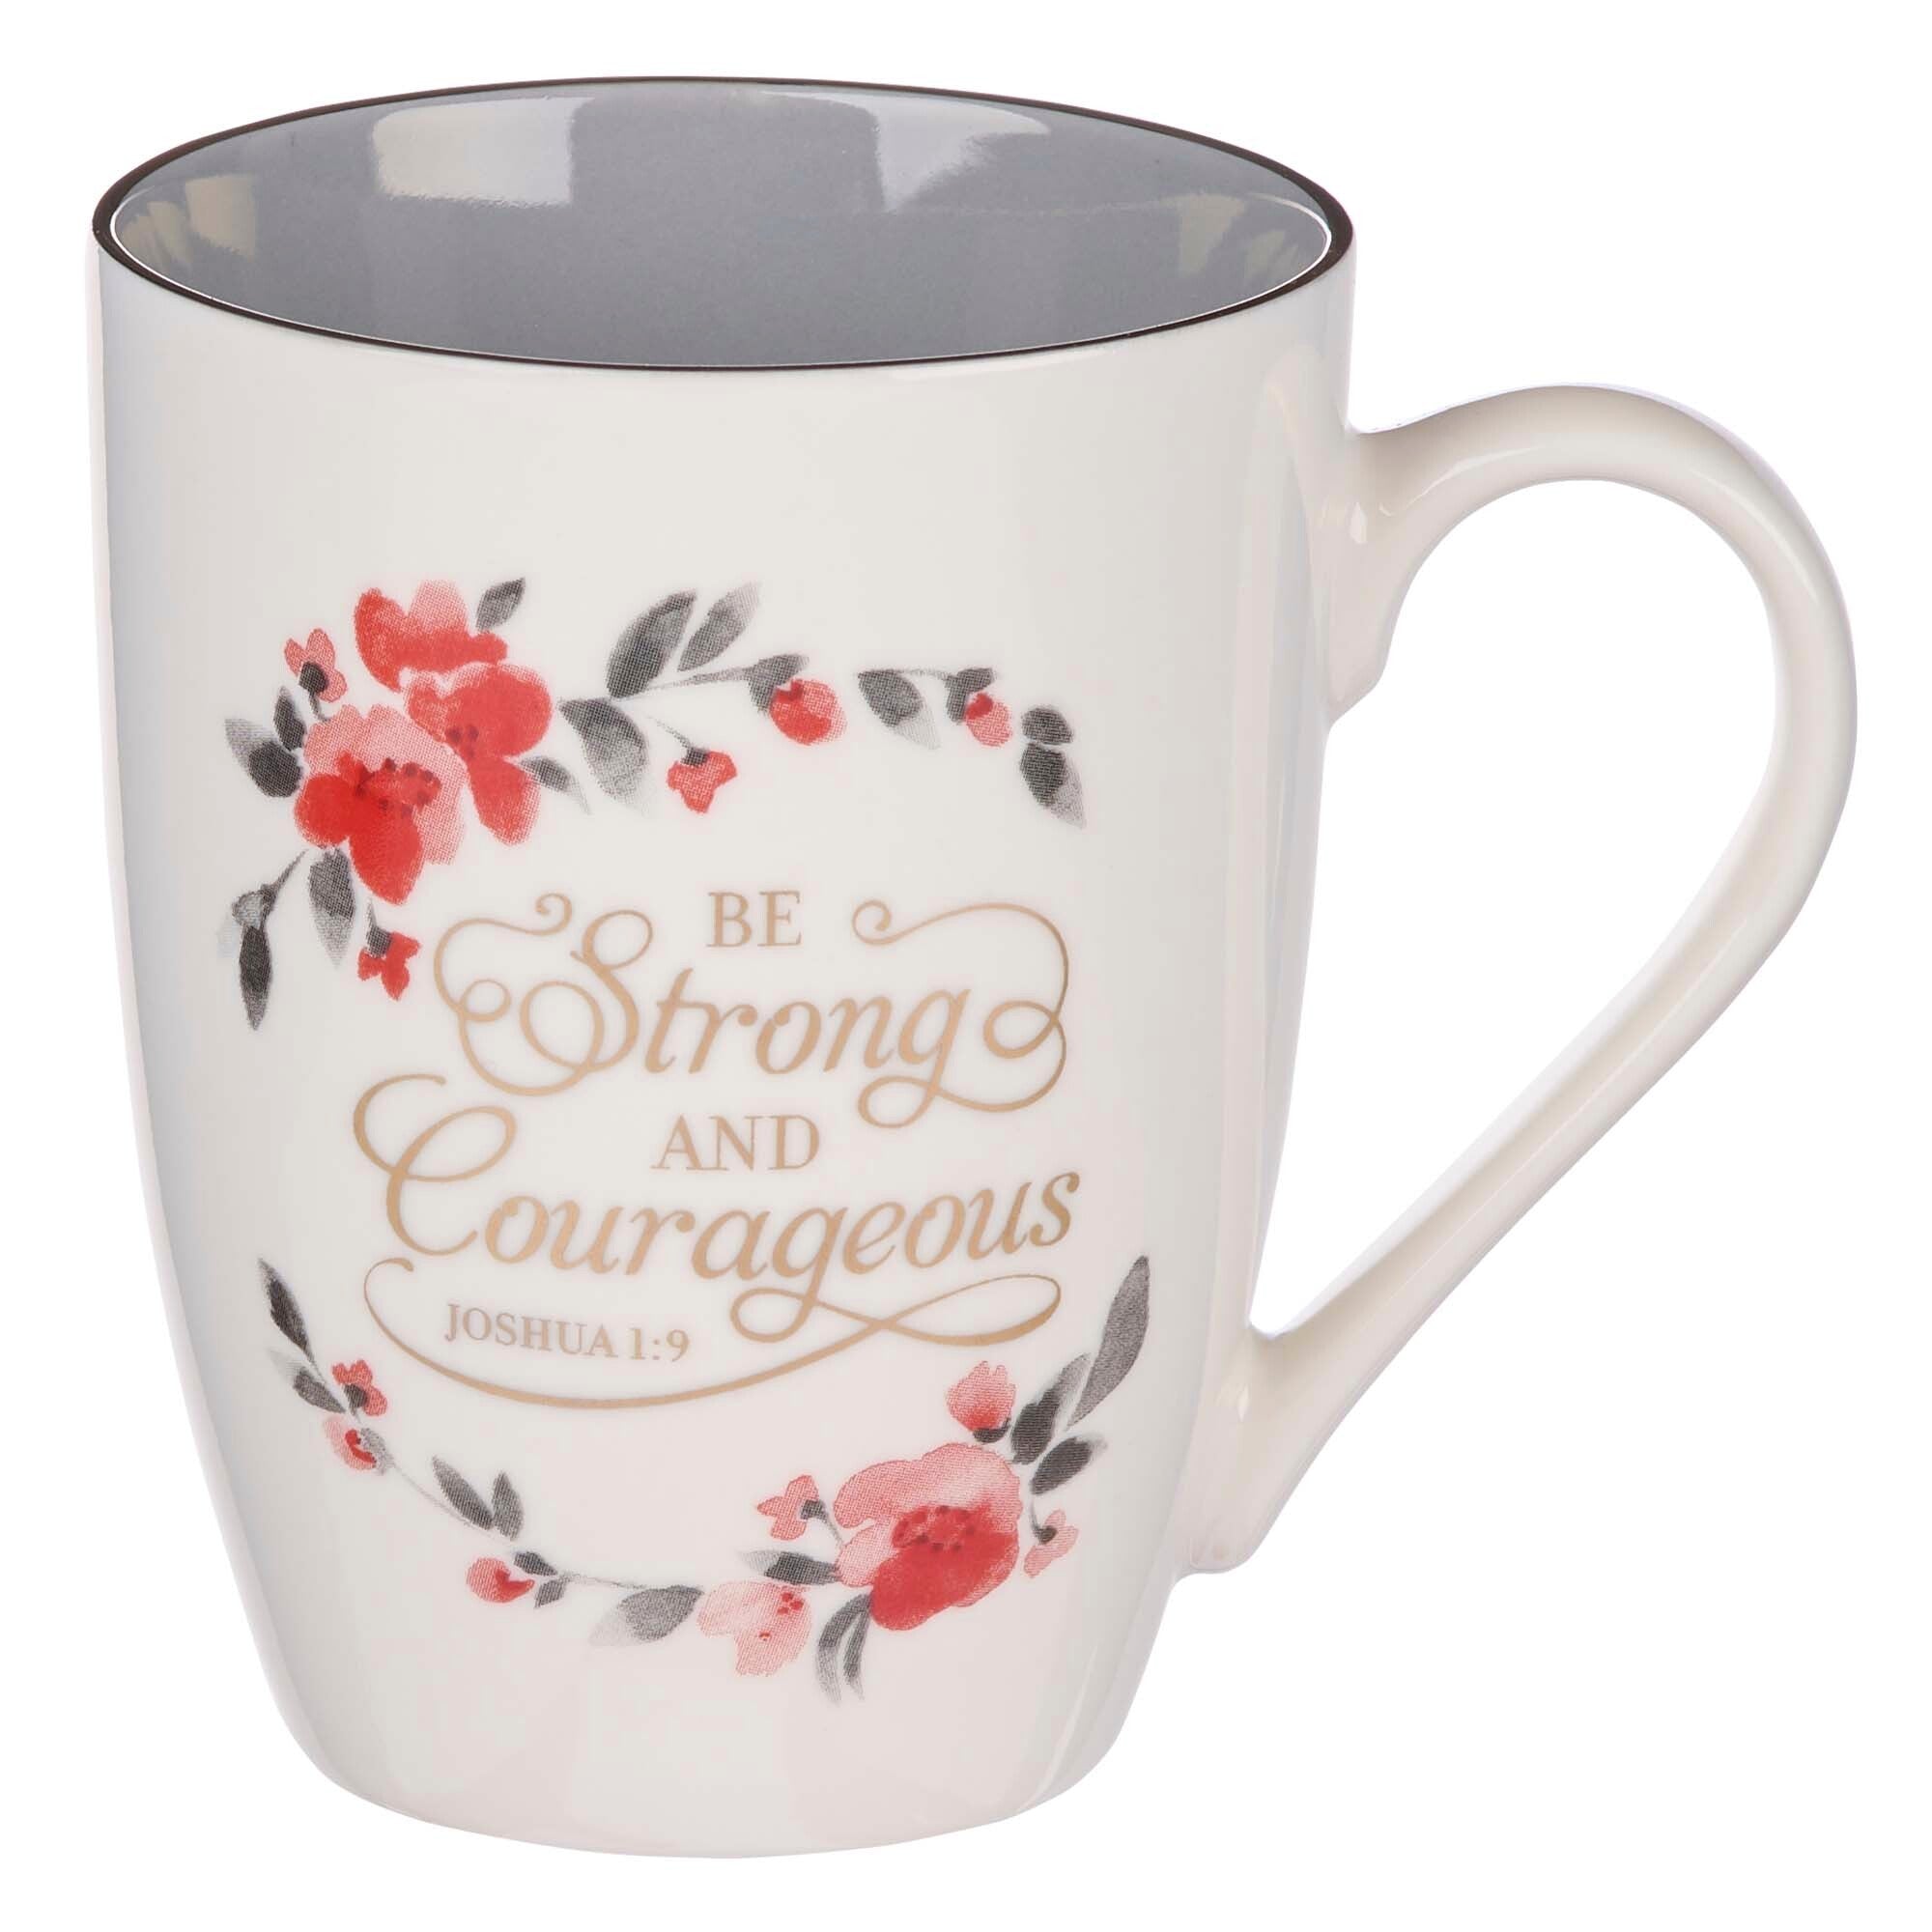 Be strong and brave mug